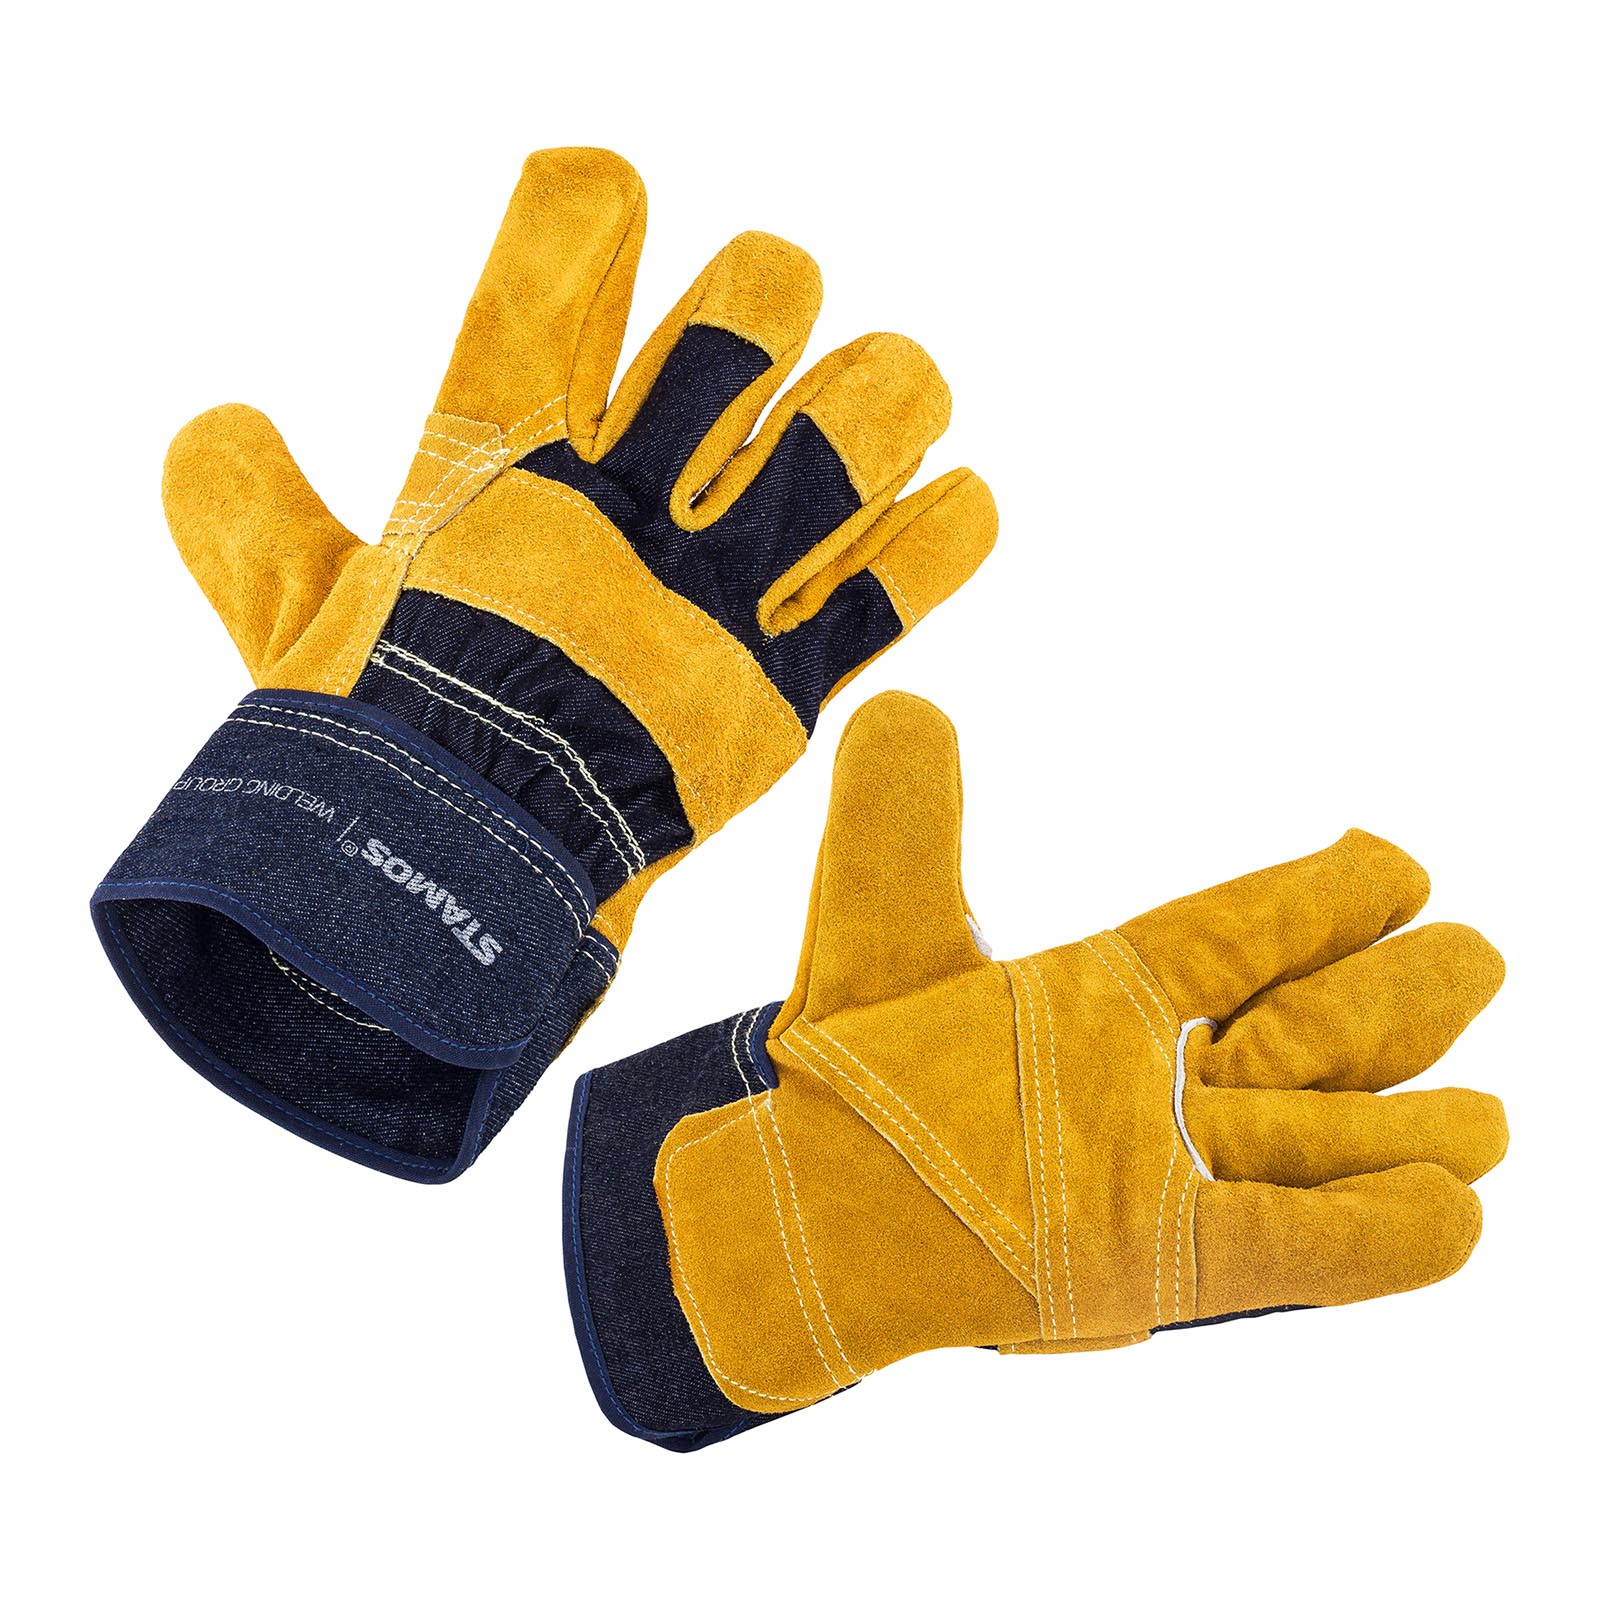 Rotary Hammer Set BOH-1600-SET - Work gloves - 1,600 W